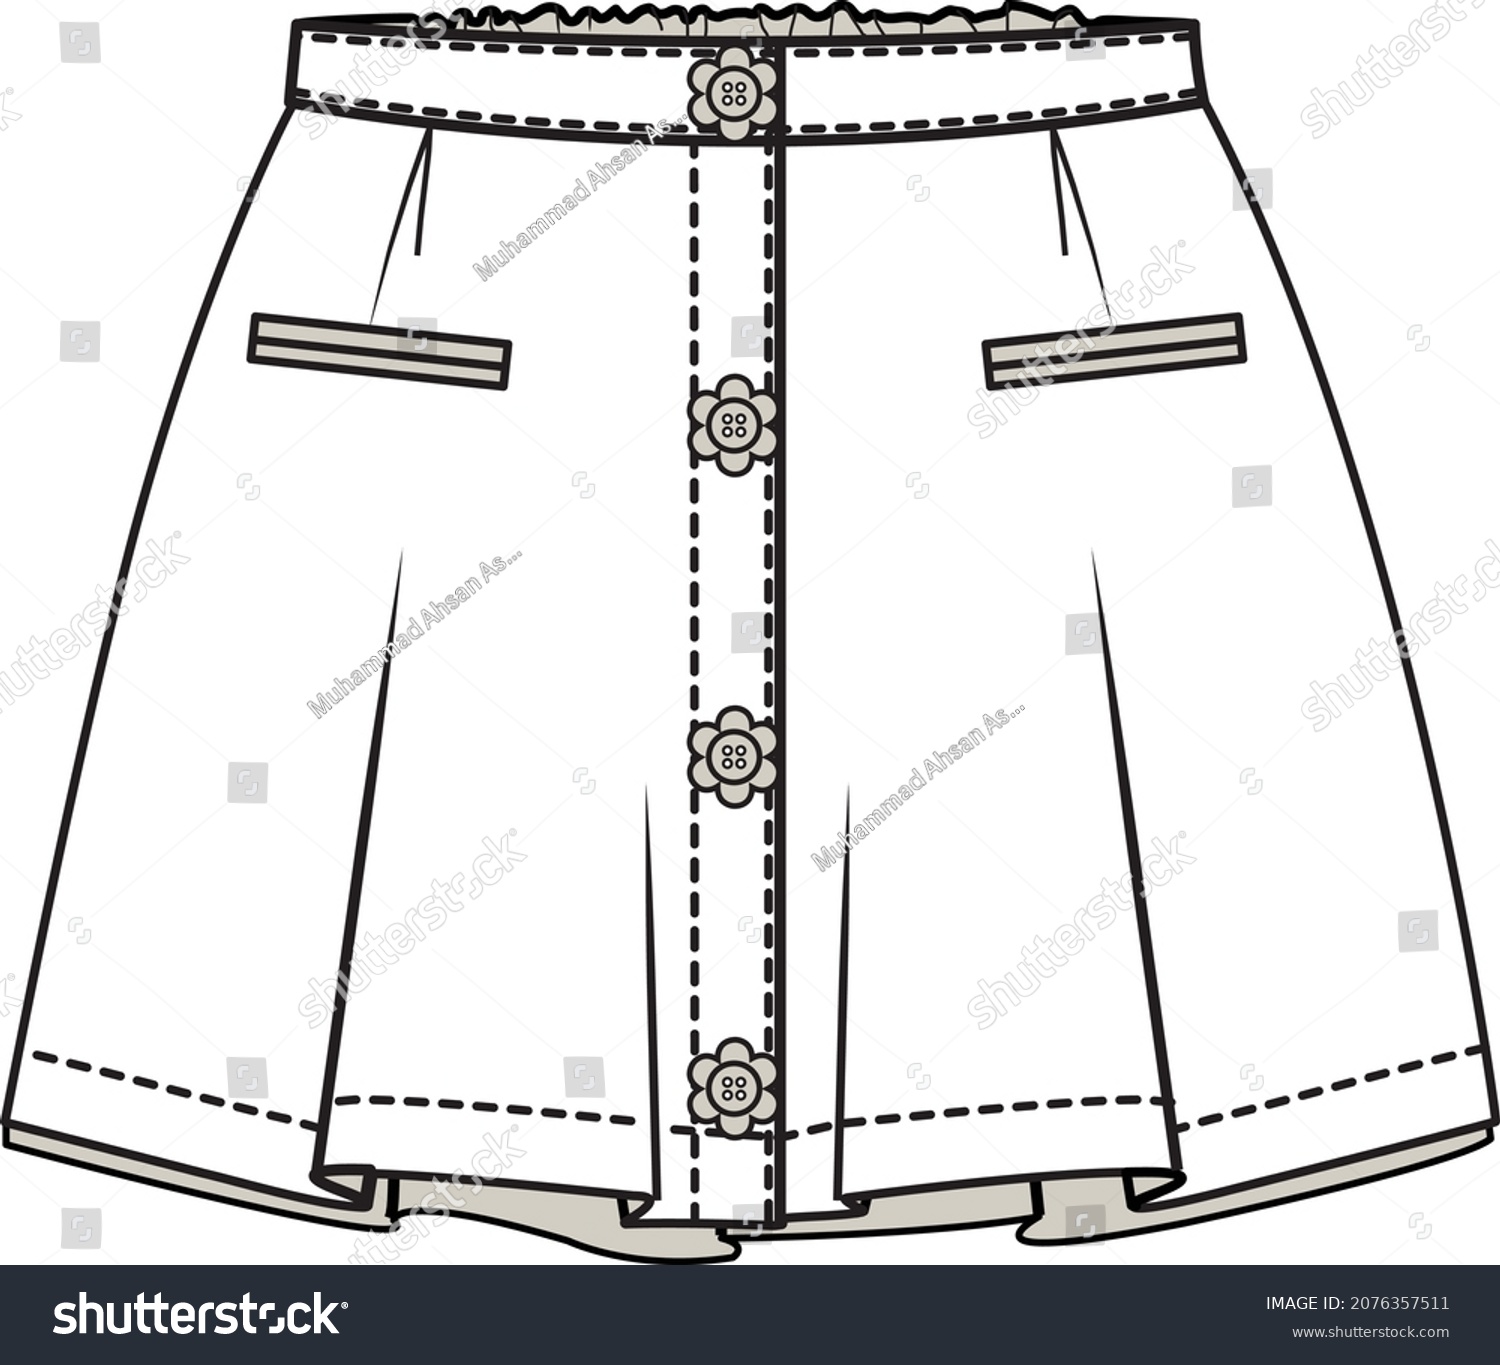 Kids Teens Girls Bottom Wear Skirts Stock Vector (Royalty Free ...